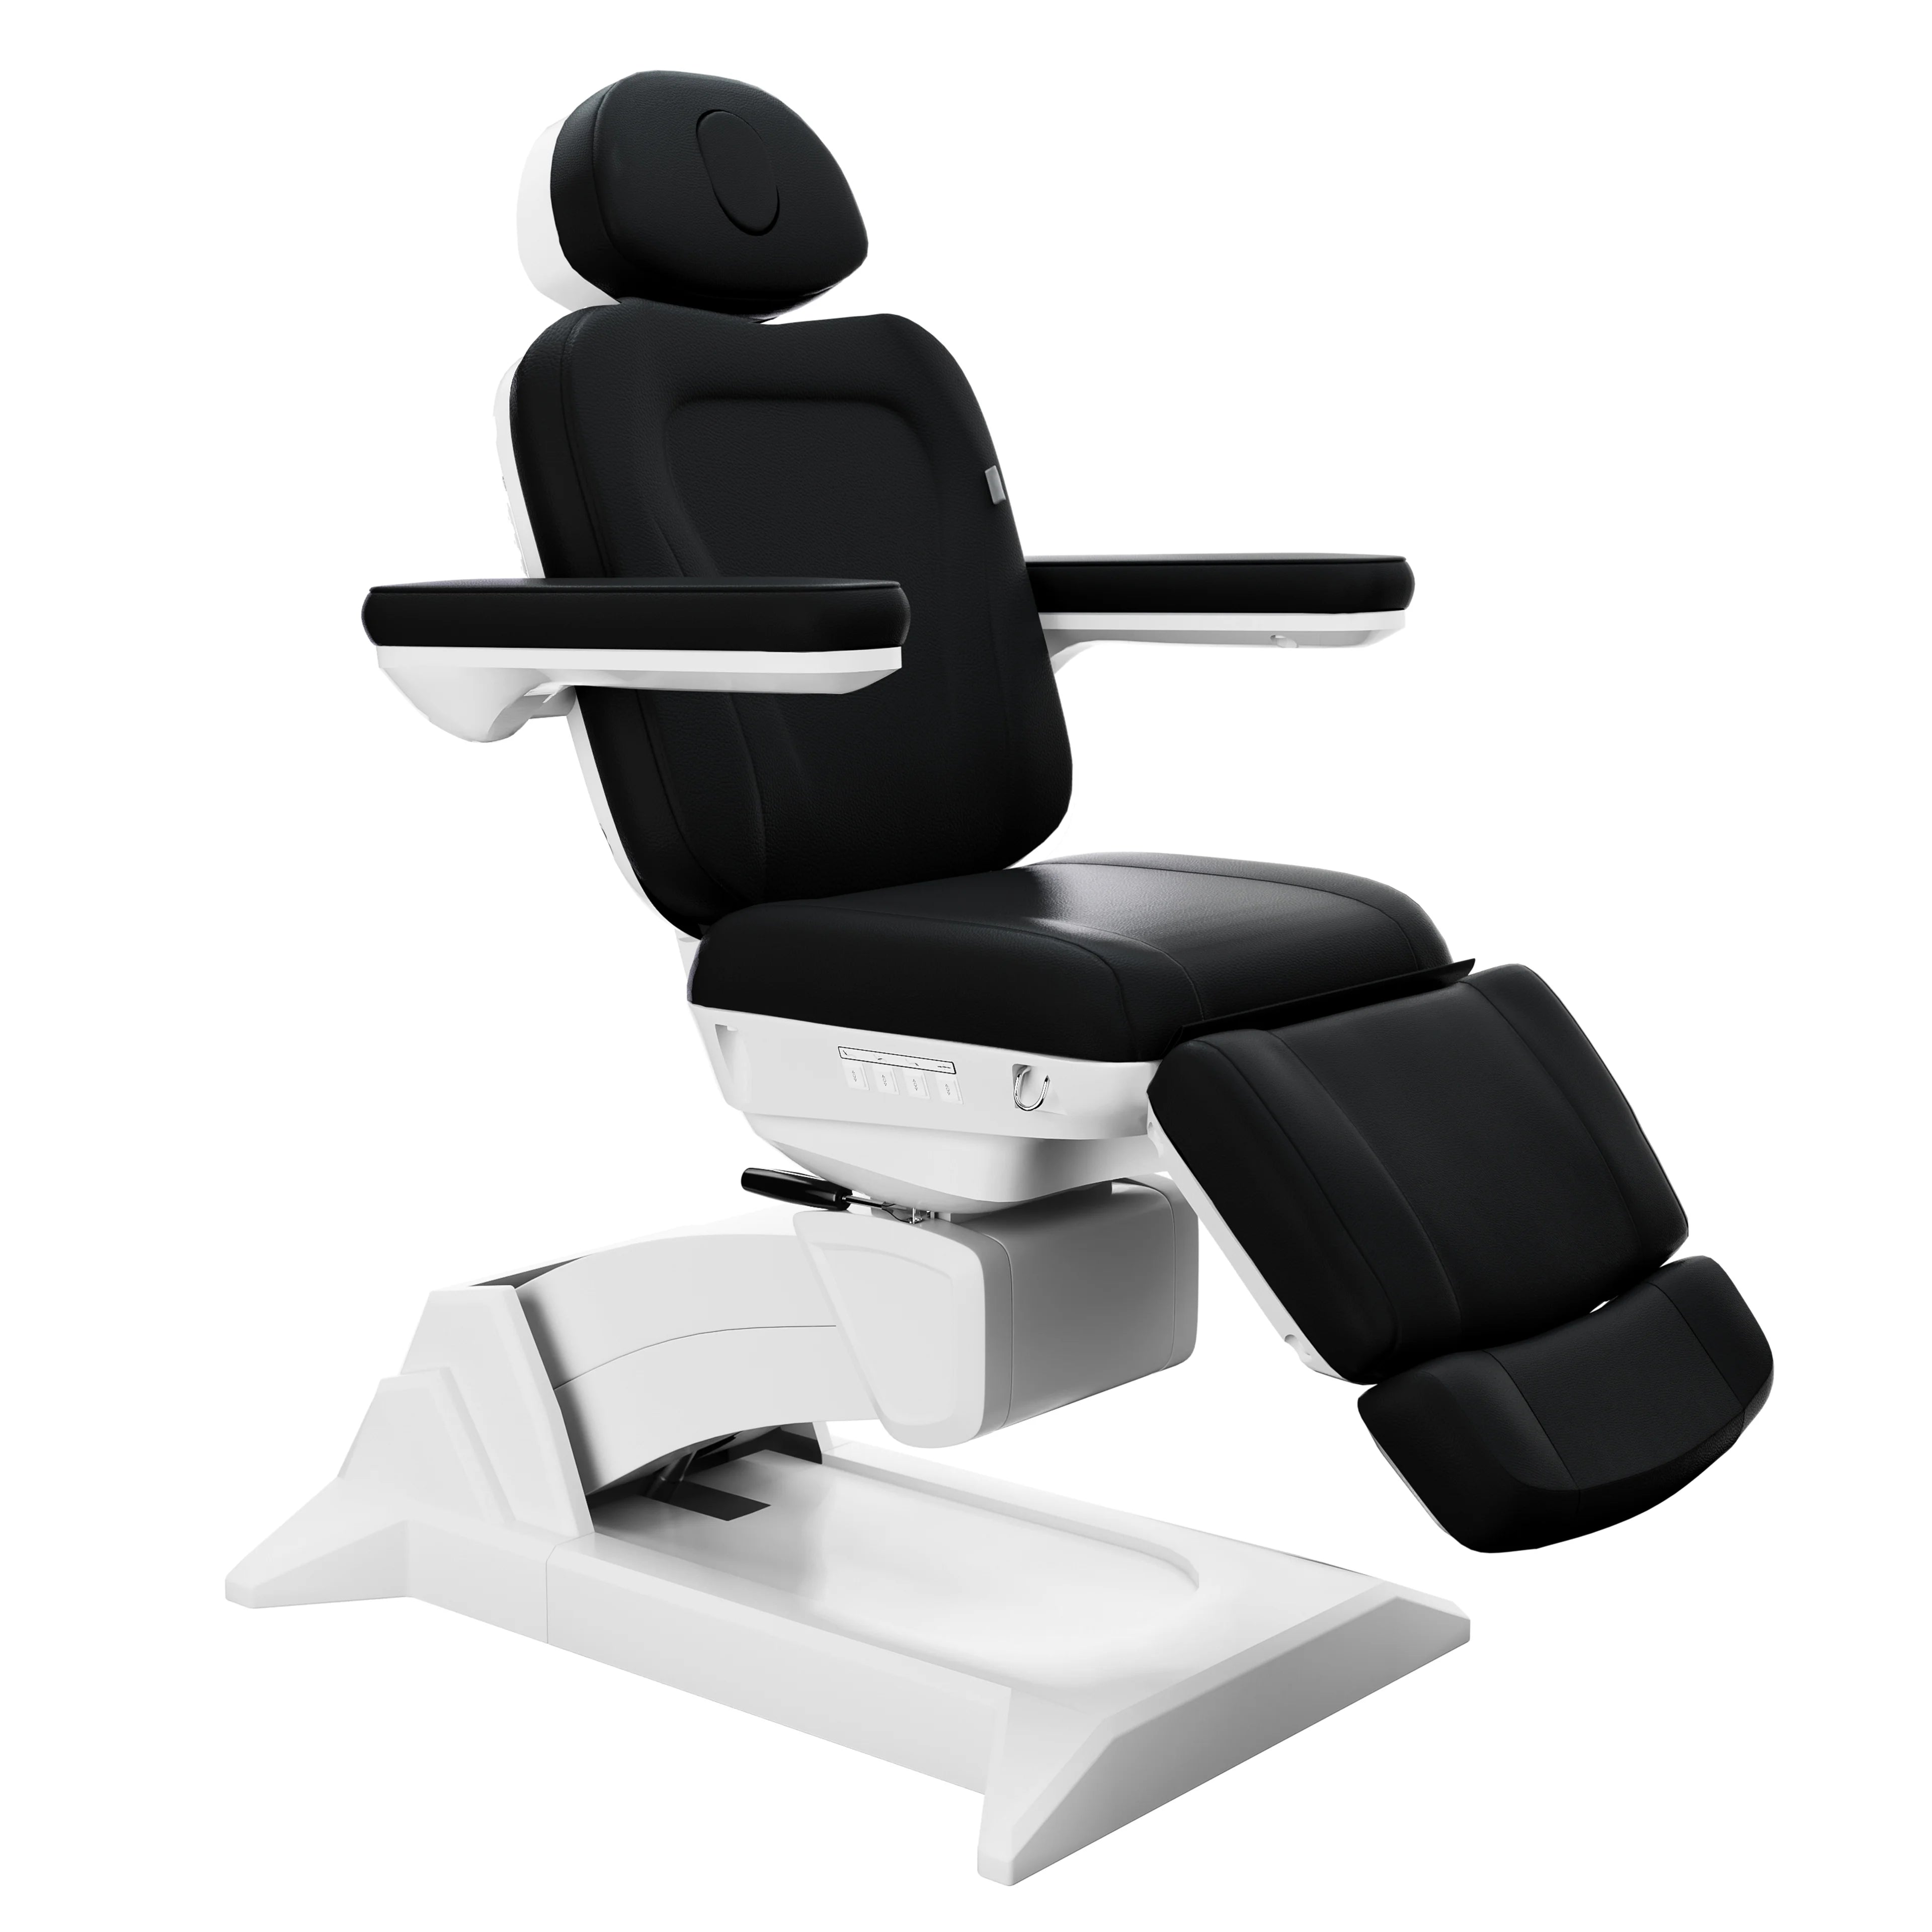 SpaMarc . Ultera (Black) . Rotating . 4 Motor Spa Treatment Chair/Bed